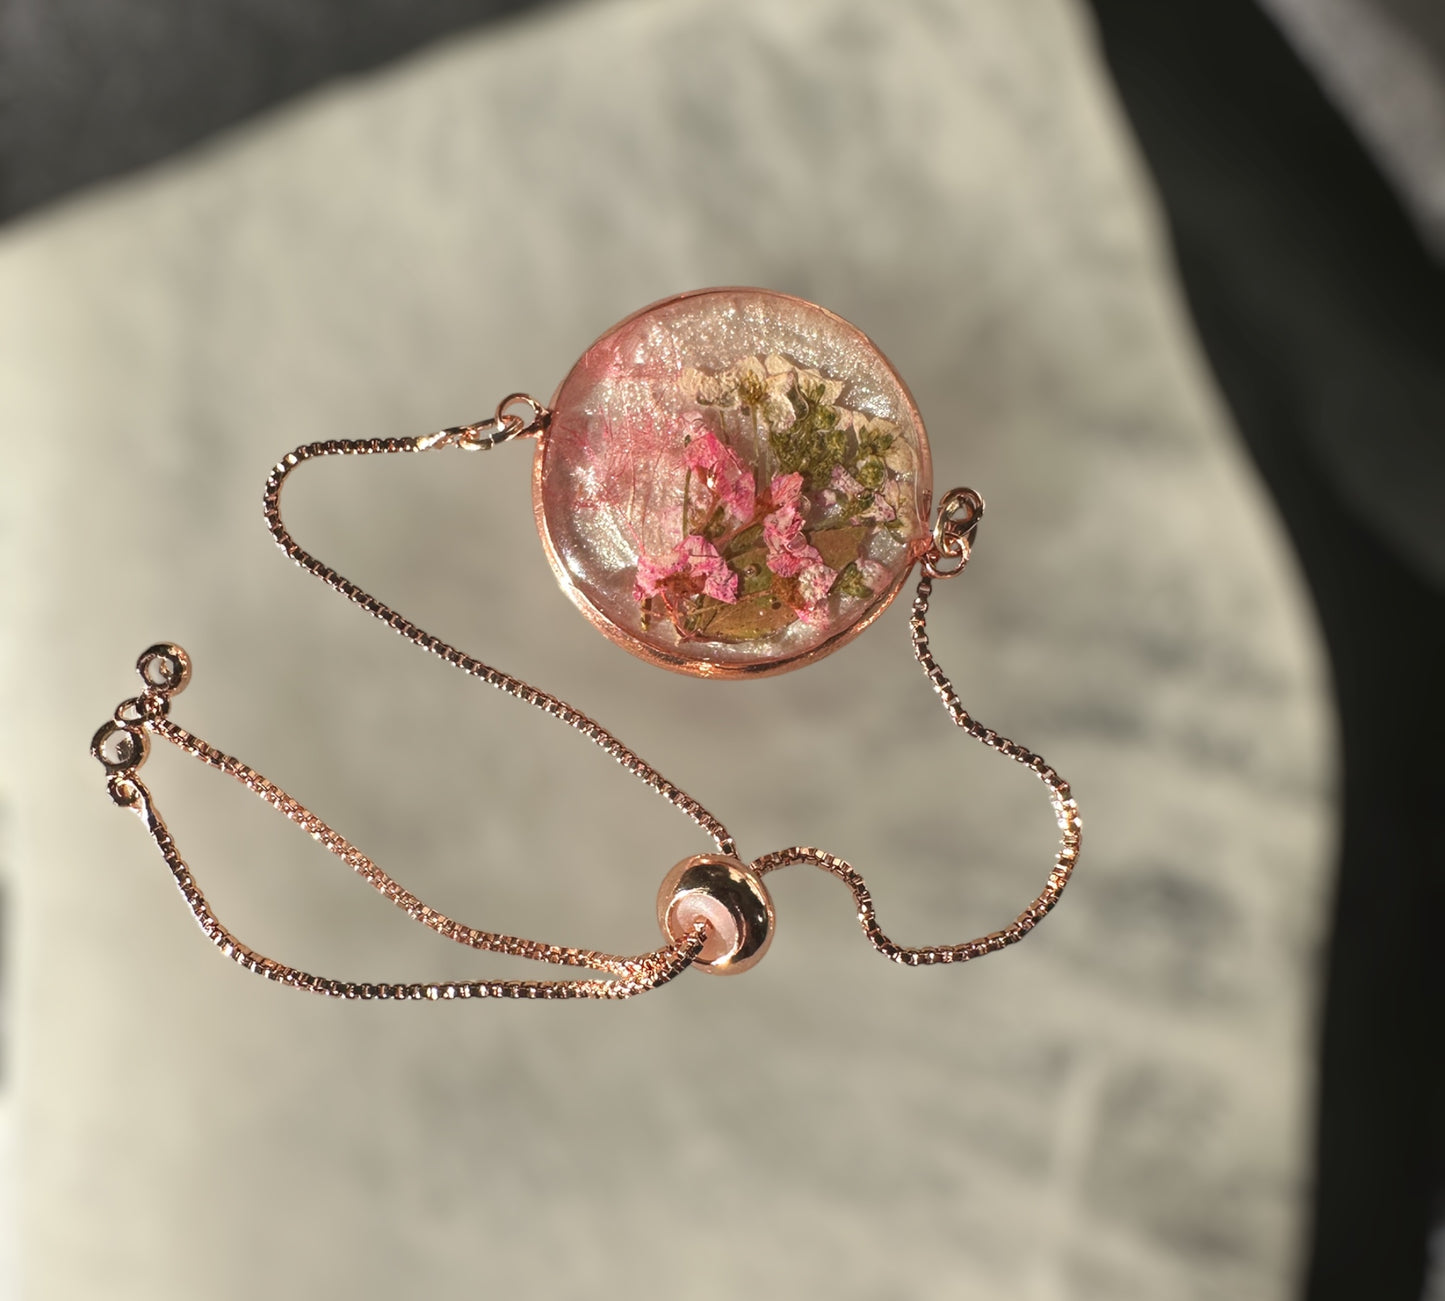 Fairy Garden Bracelet: Handmade Rose Gold Bracelet with Dried Flowers